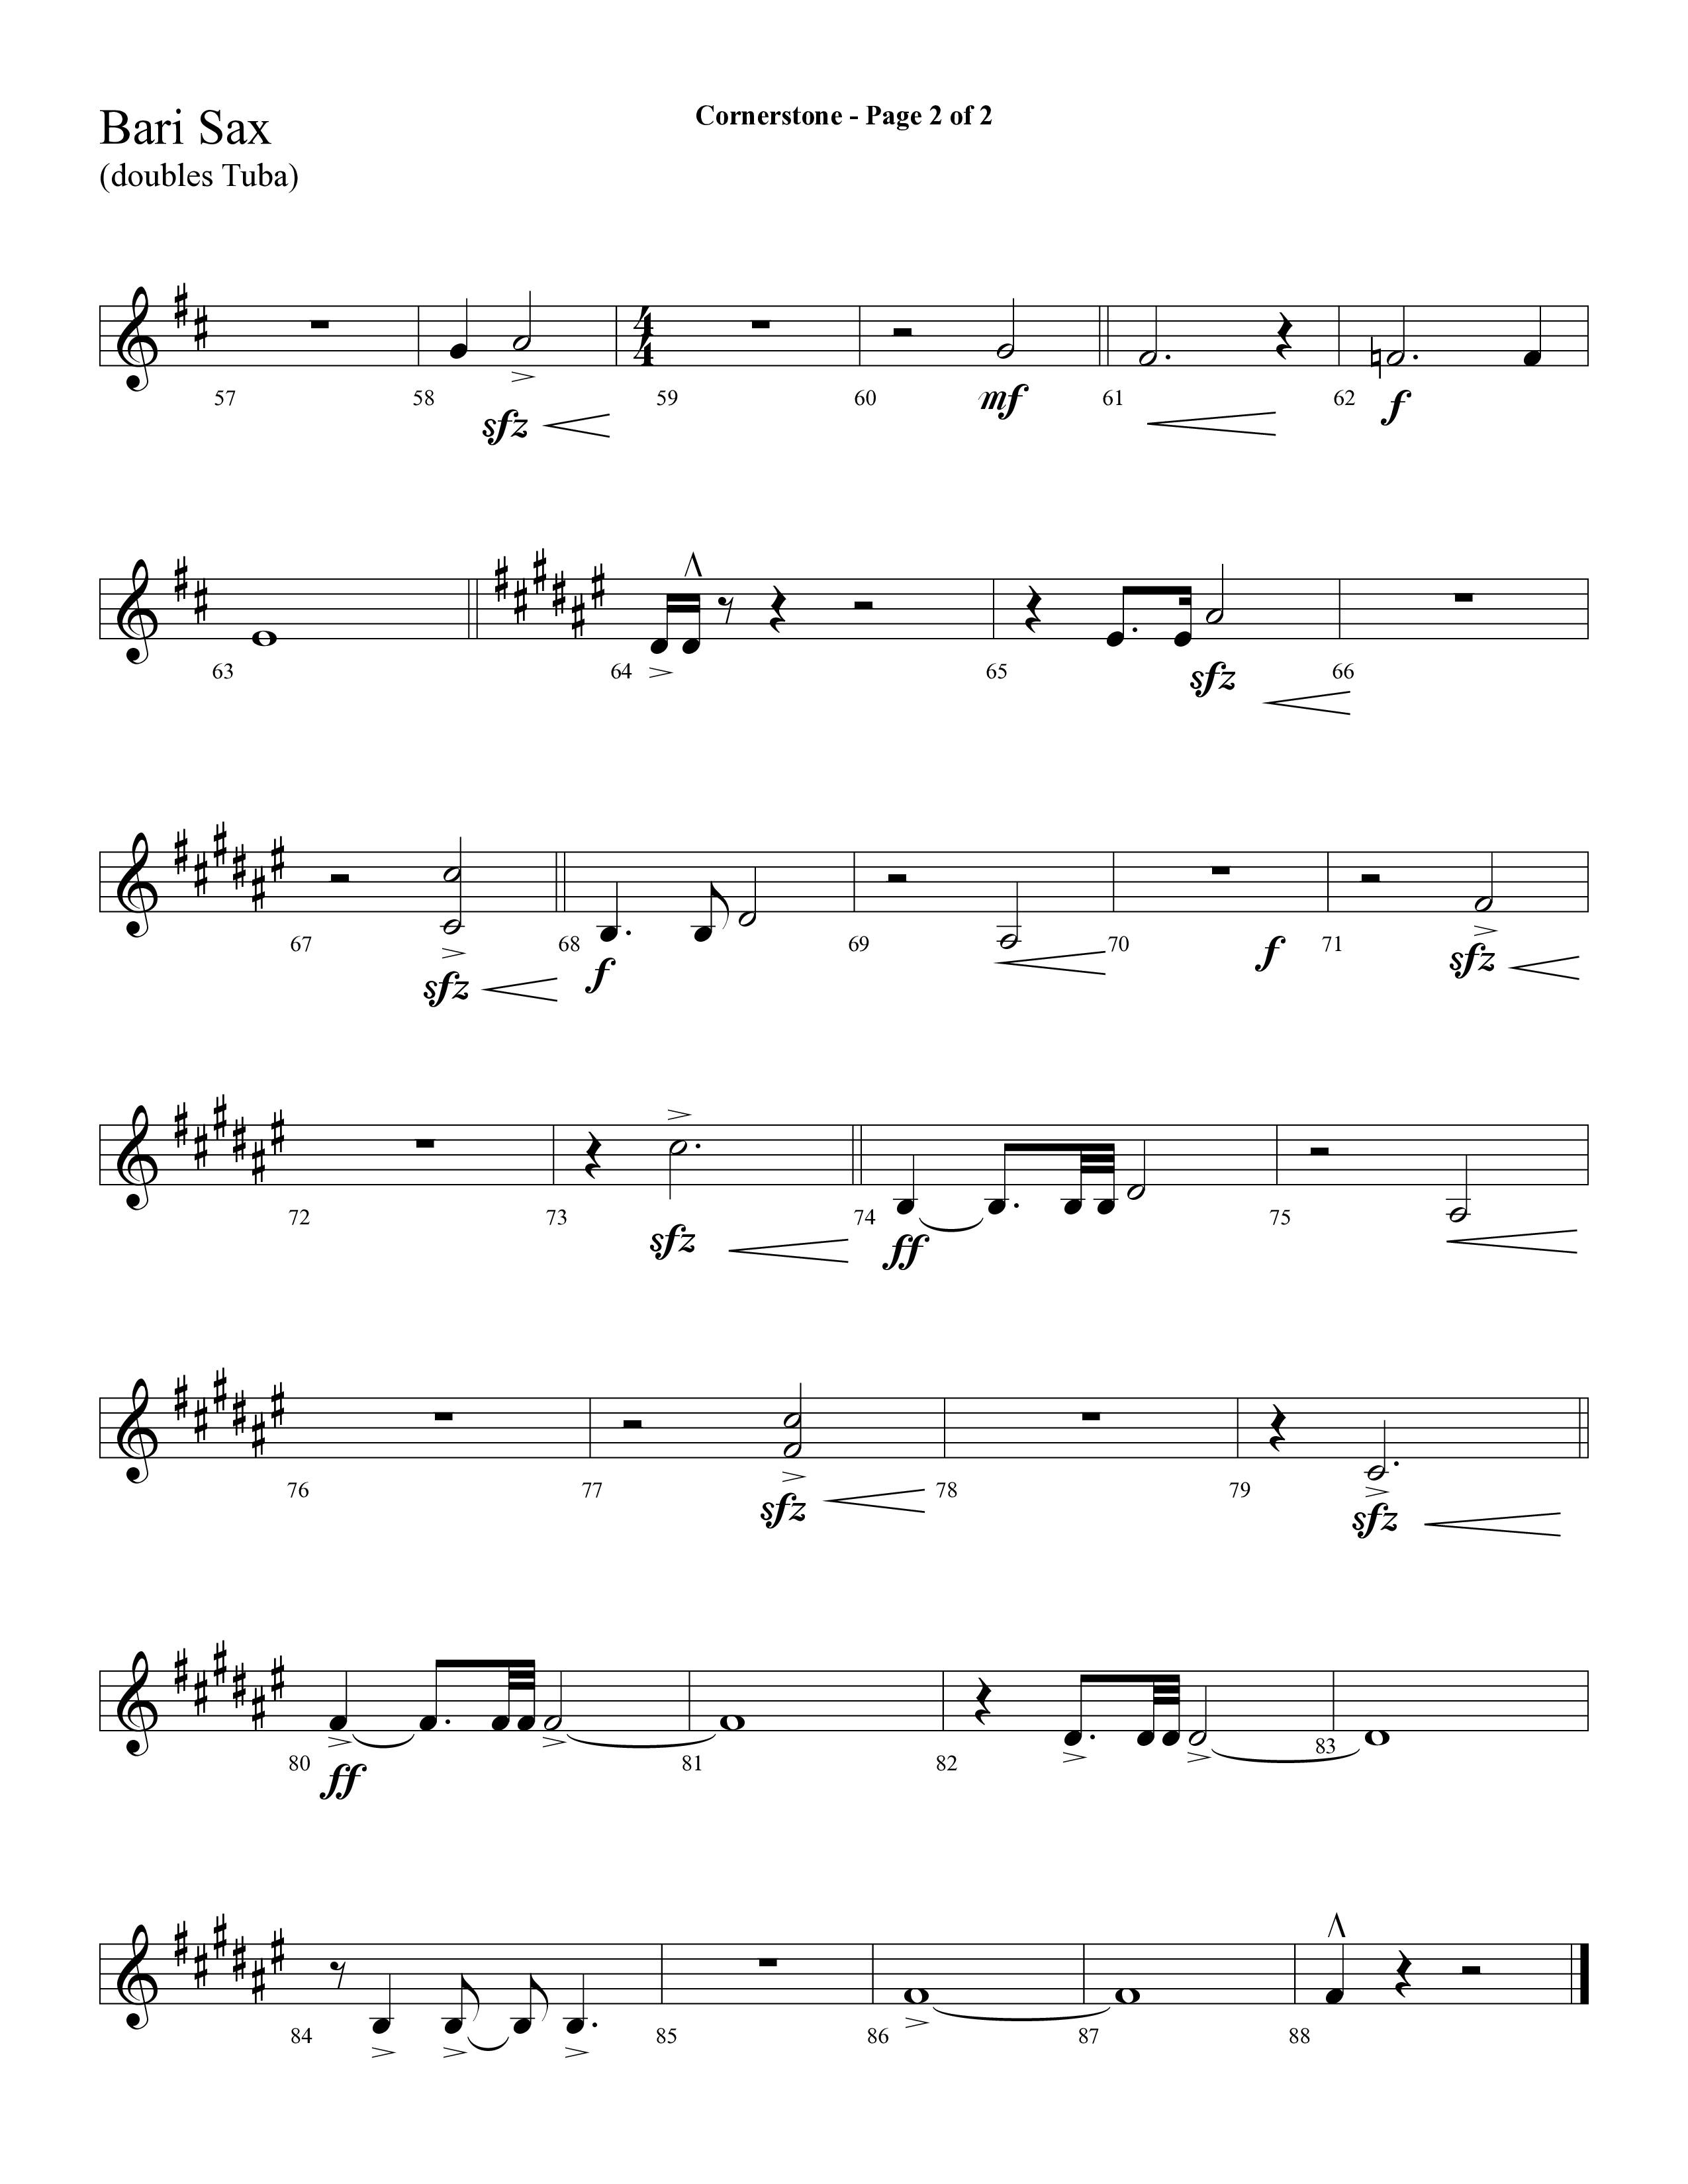 Cornerstone (with The Solid Rock) (Choral Anthem SATB) Bari Sax (Lifeway Choral / Arr. Cliff Duren)